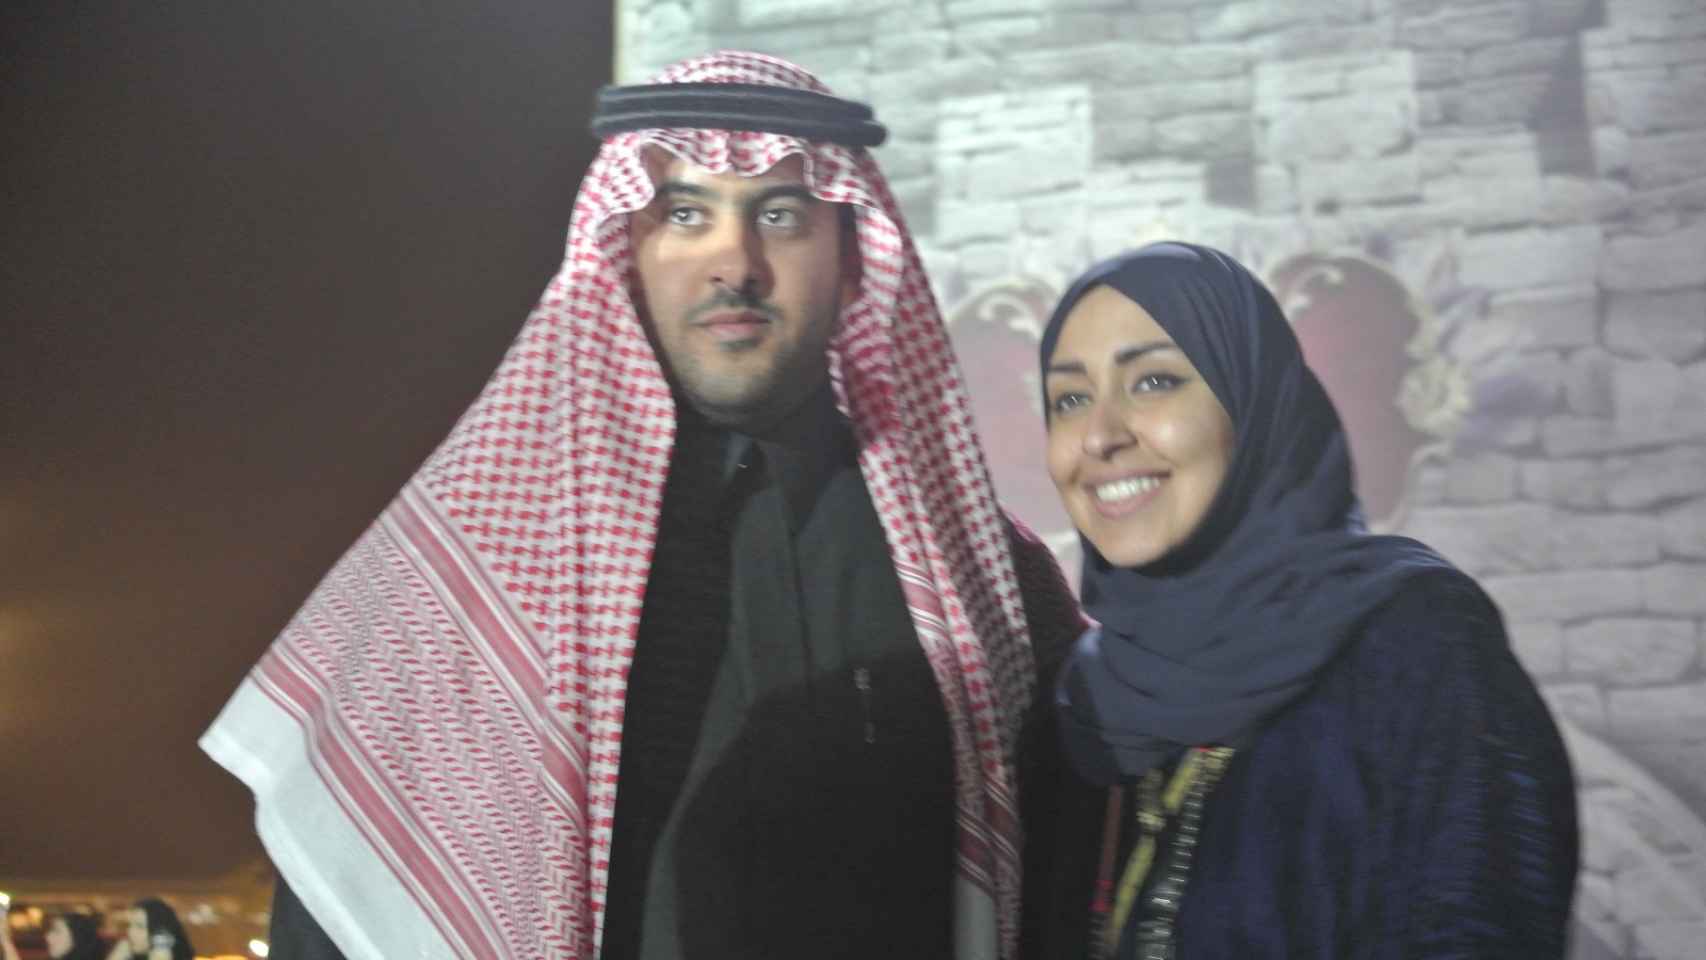 Una pareja de saudíes en el festival de Wonderland